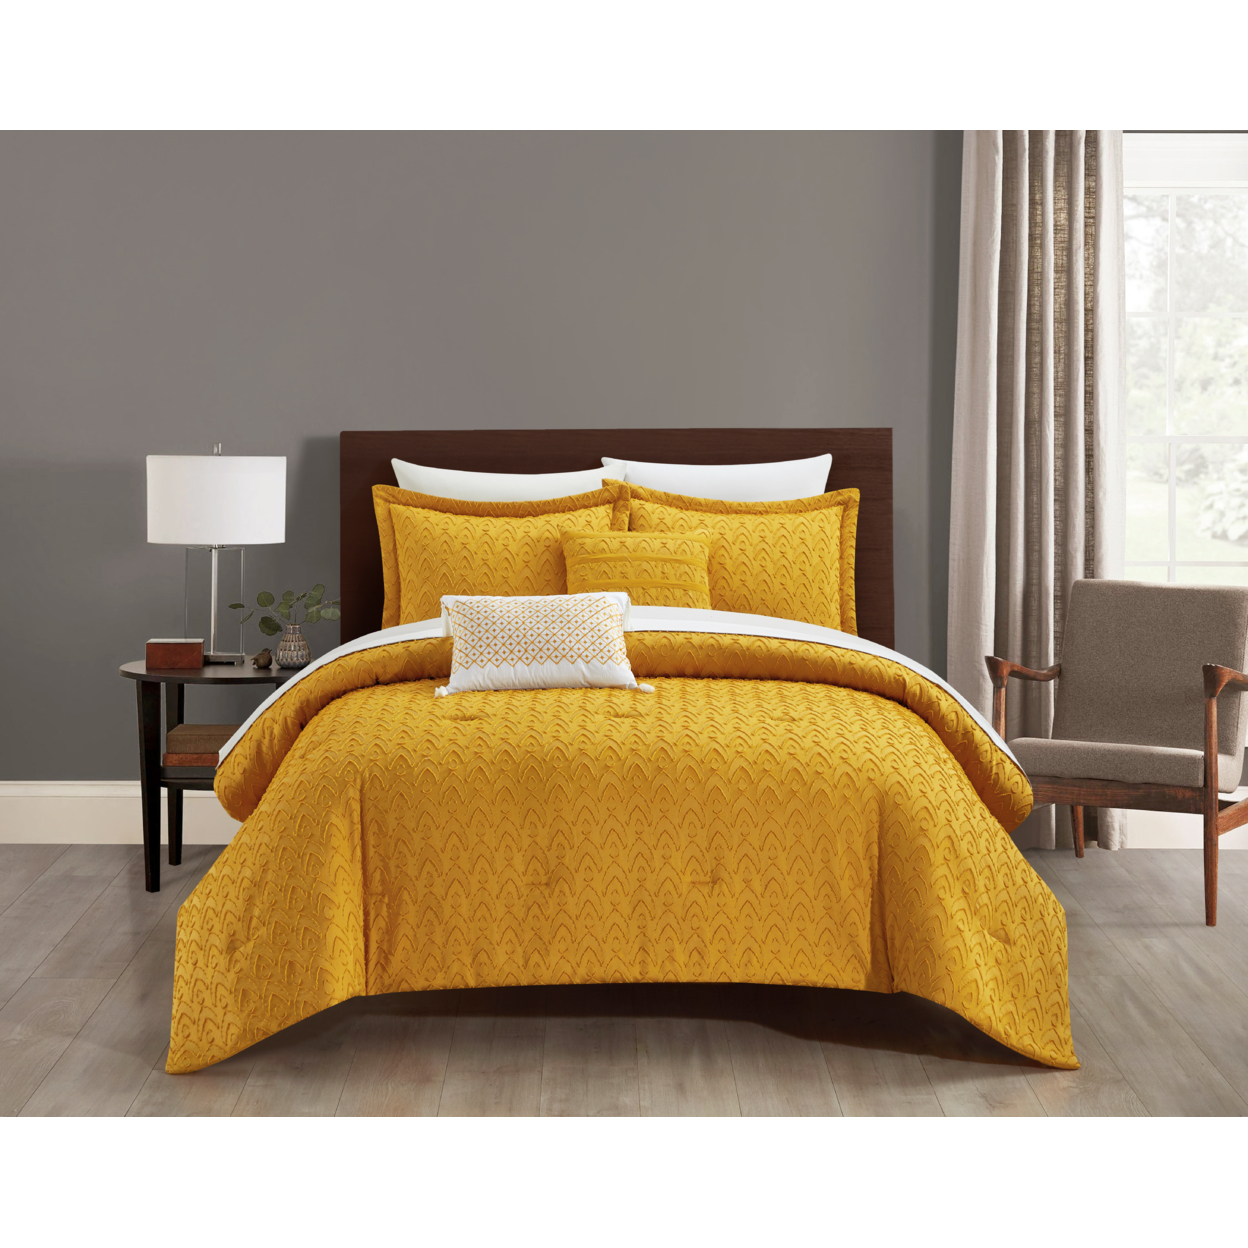 Deign 5 Piece Comforter Set Clip Jacquard Geometric Pattern Design Bedding - Beige, Queen